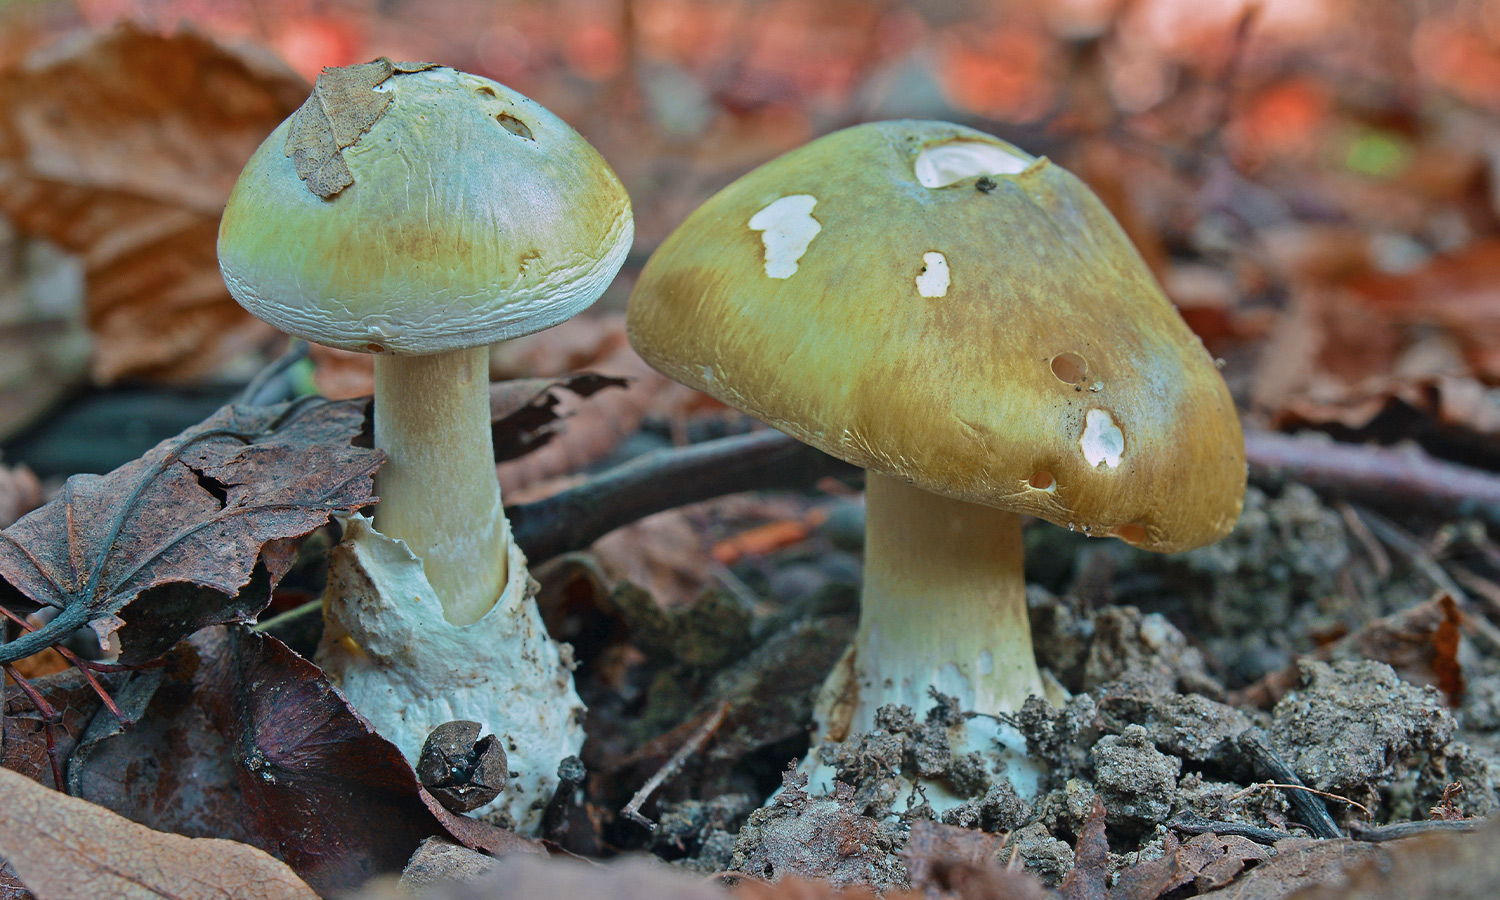 Death cap mushrooms, not good for foraging.